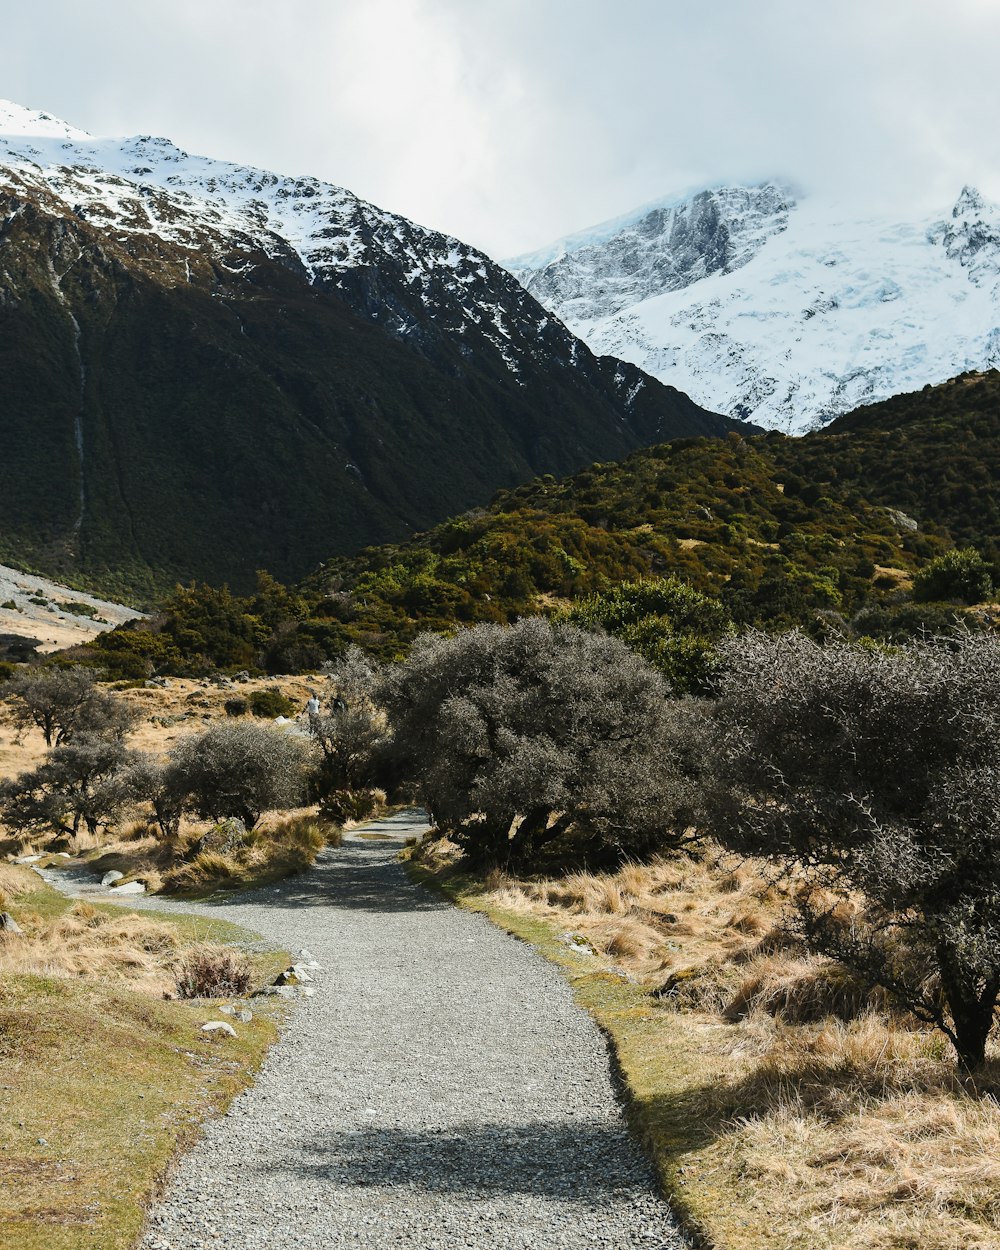 a path leading to a snowy mountain range